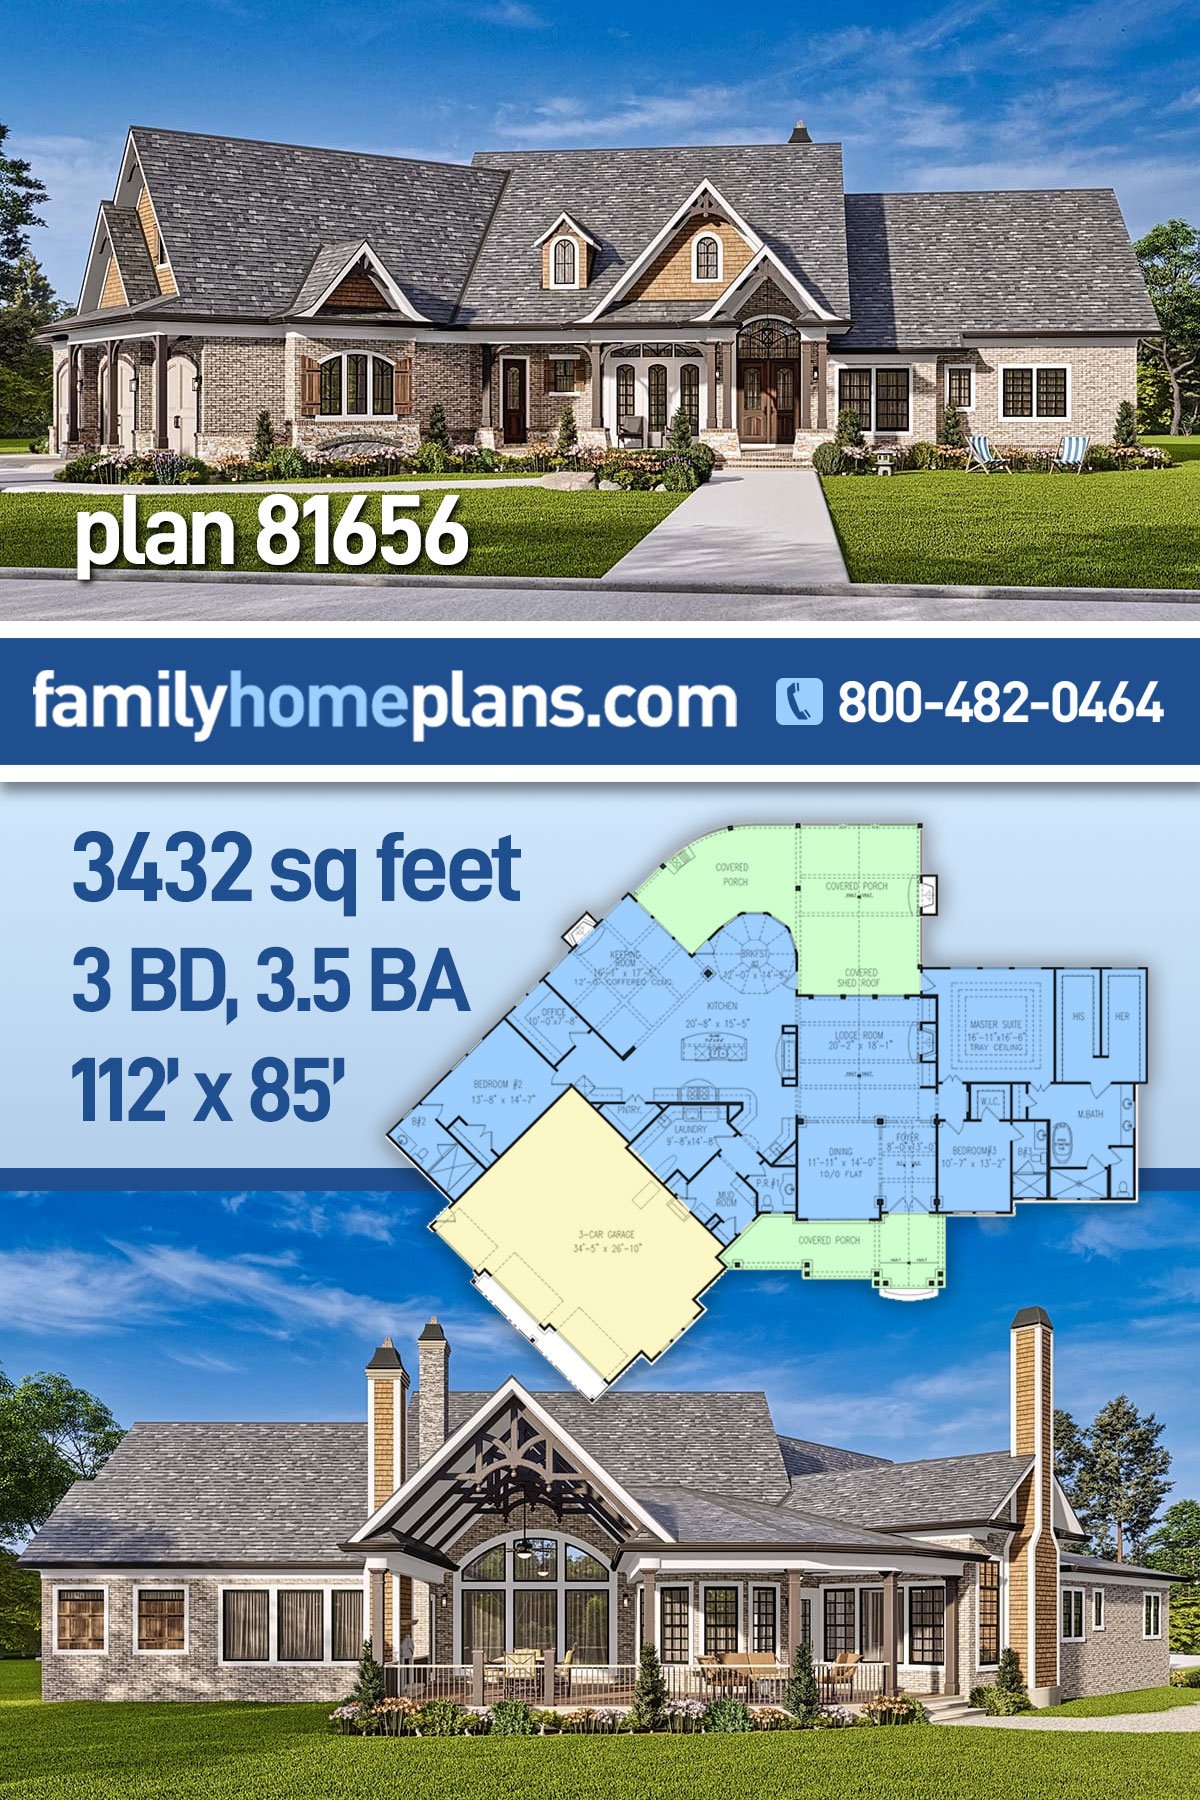 House Plan 81656